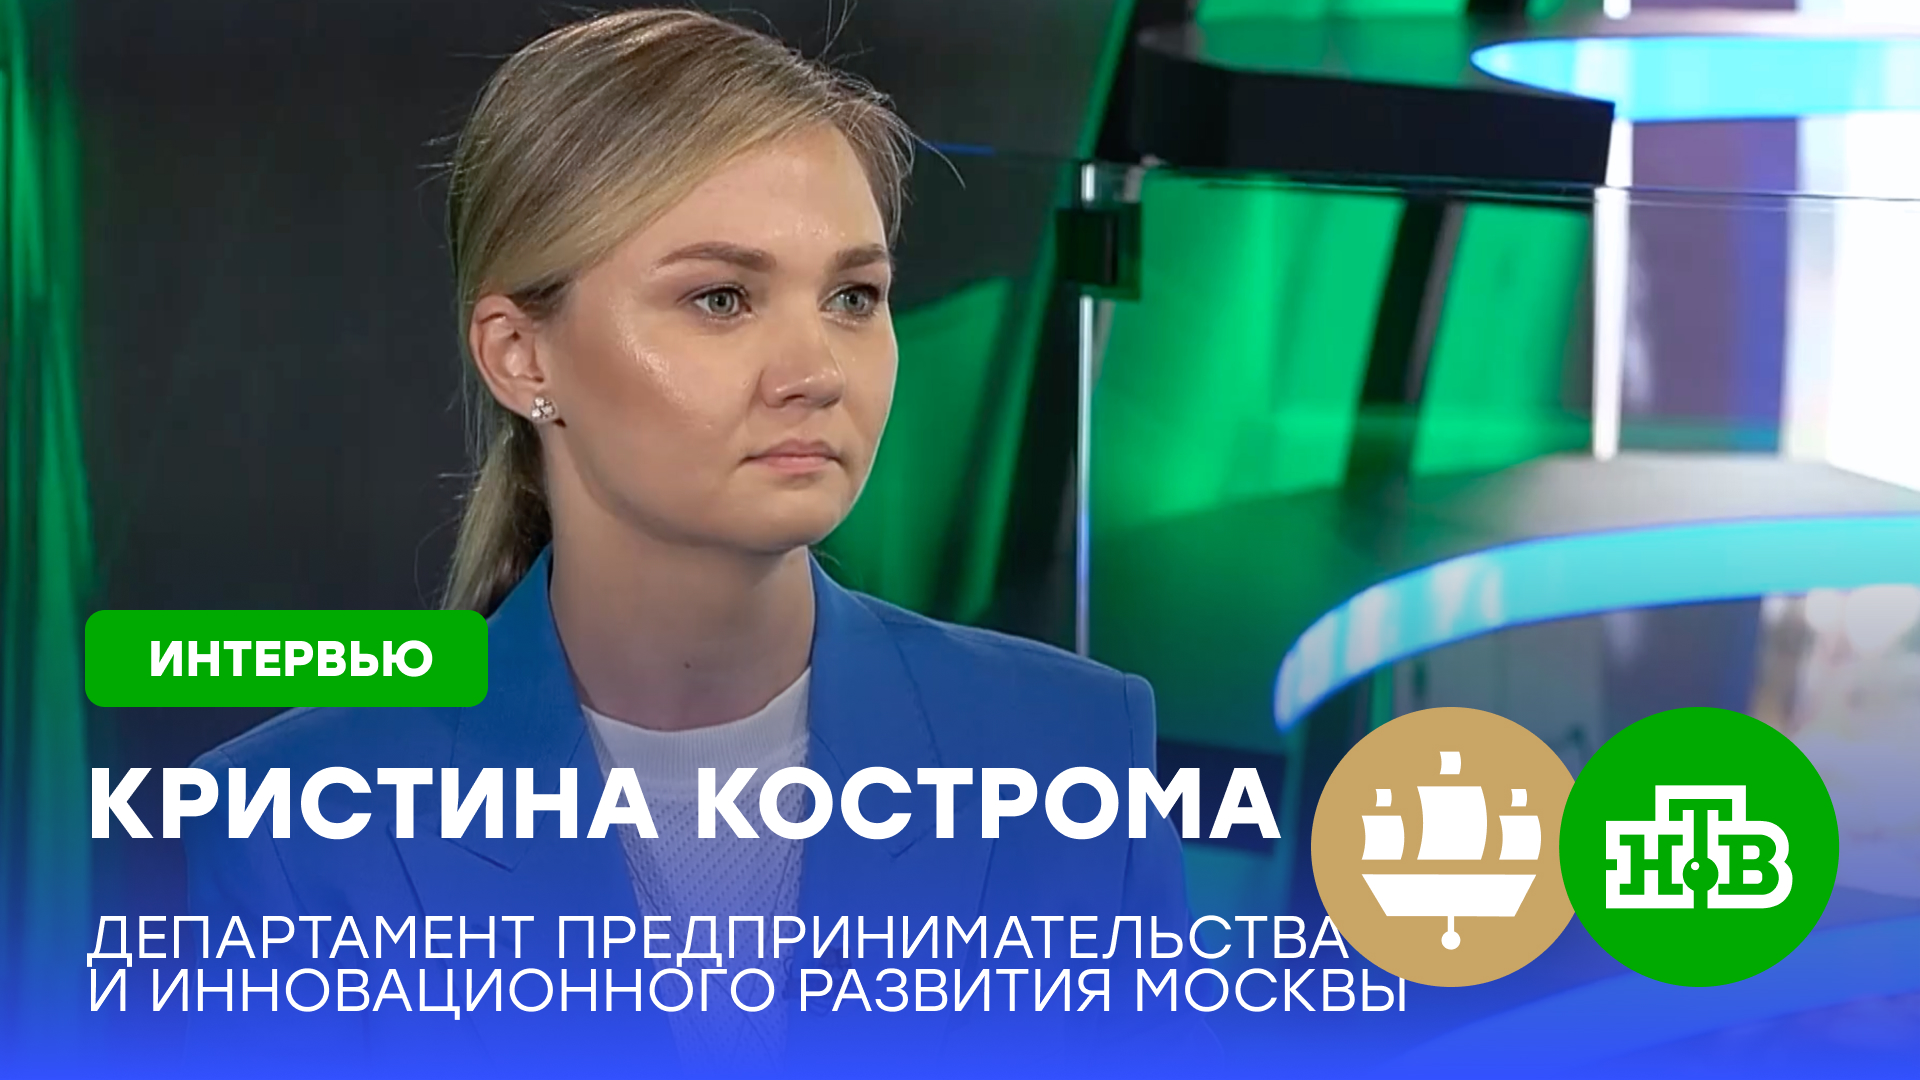 Кристина Кострома: продукция московских компаний востребована за рубежом